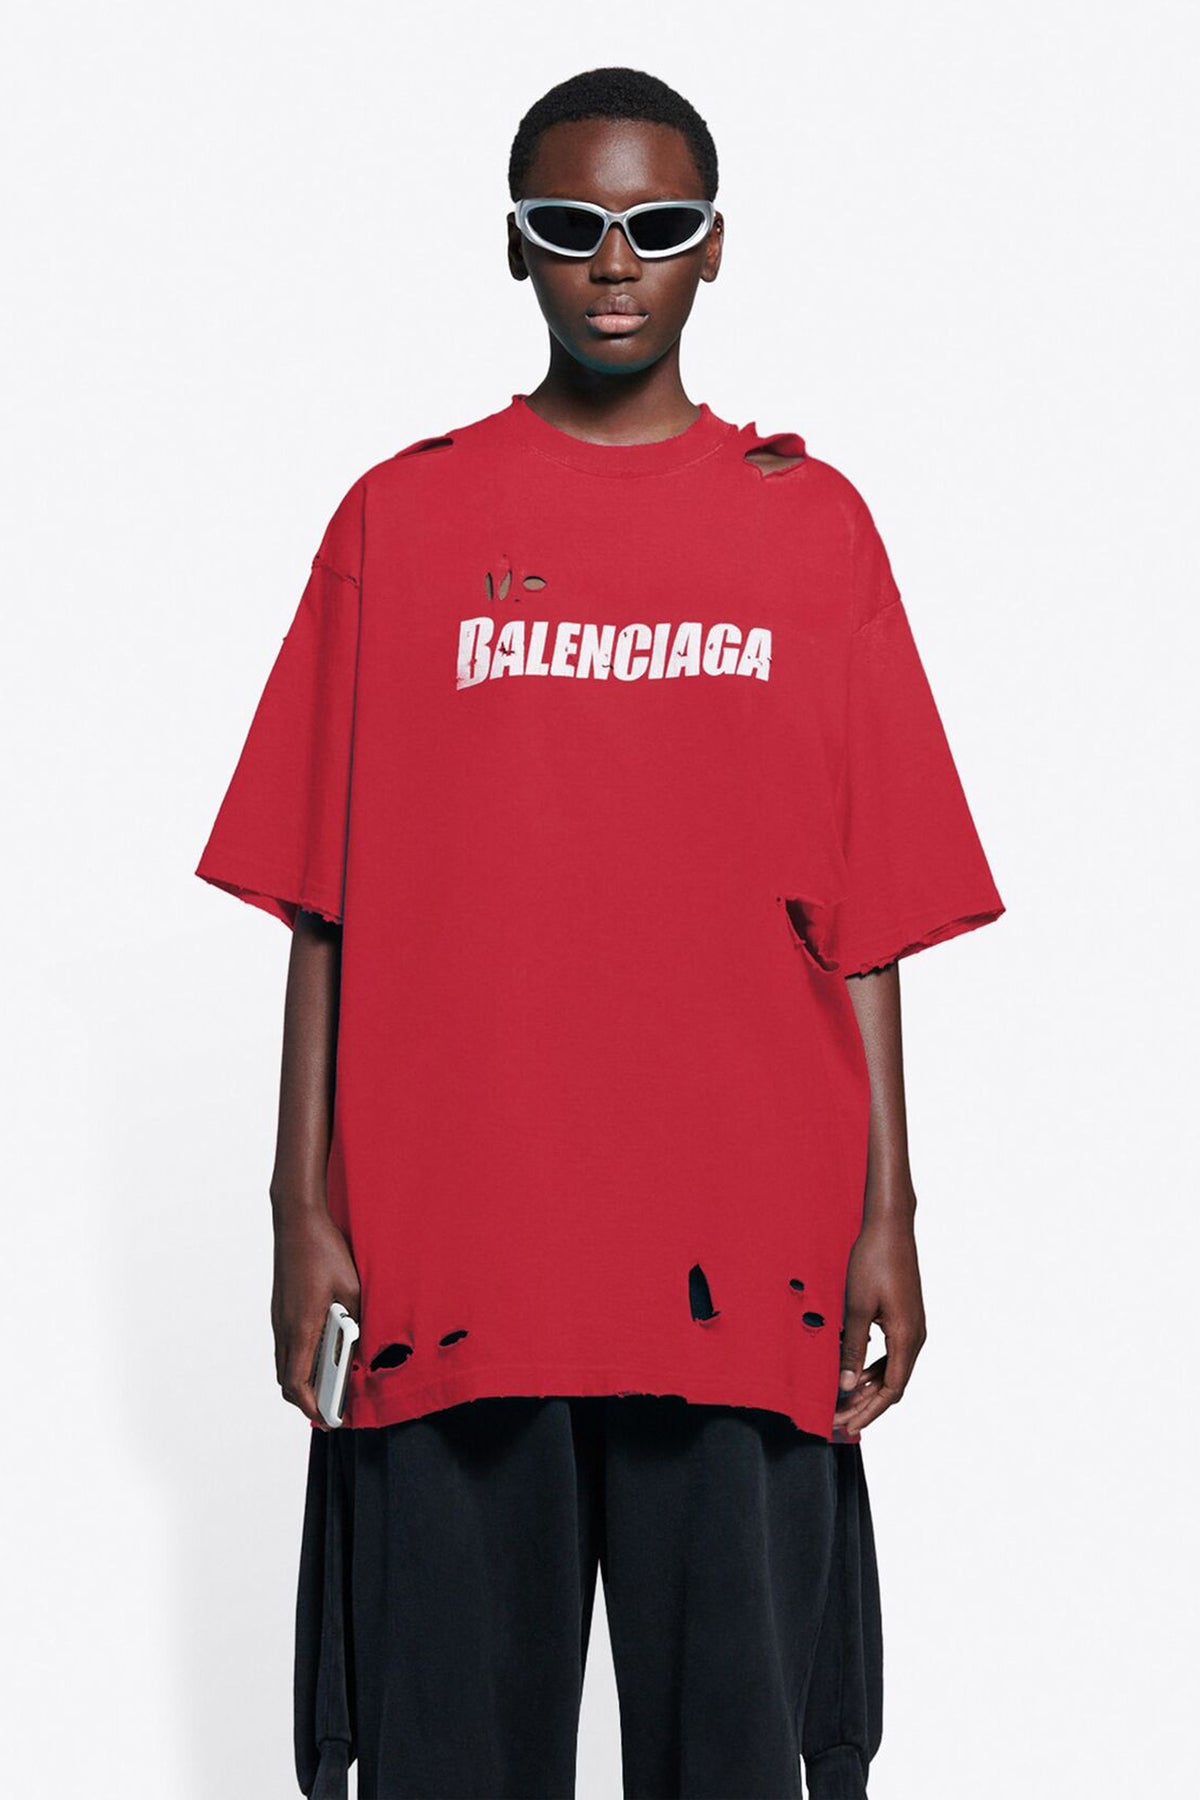 Balenciaga Destroyed T-Shirt Red